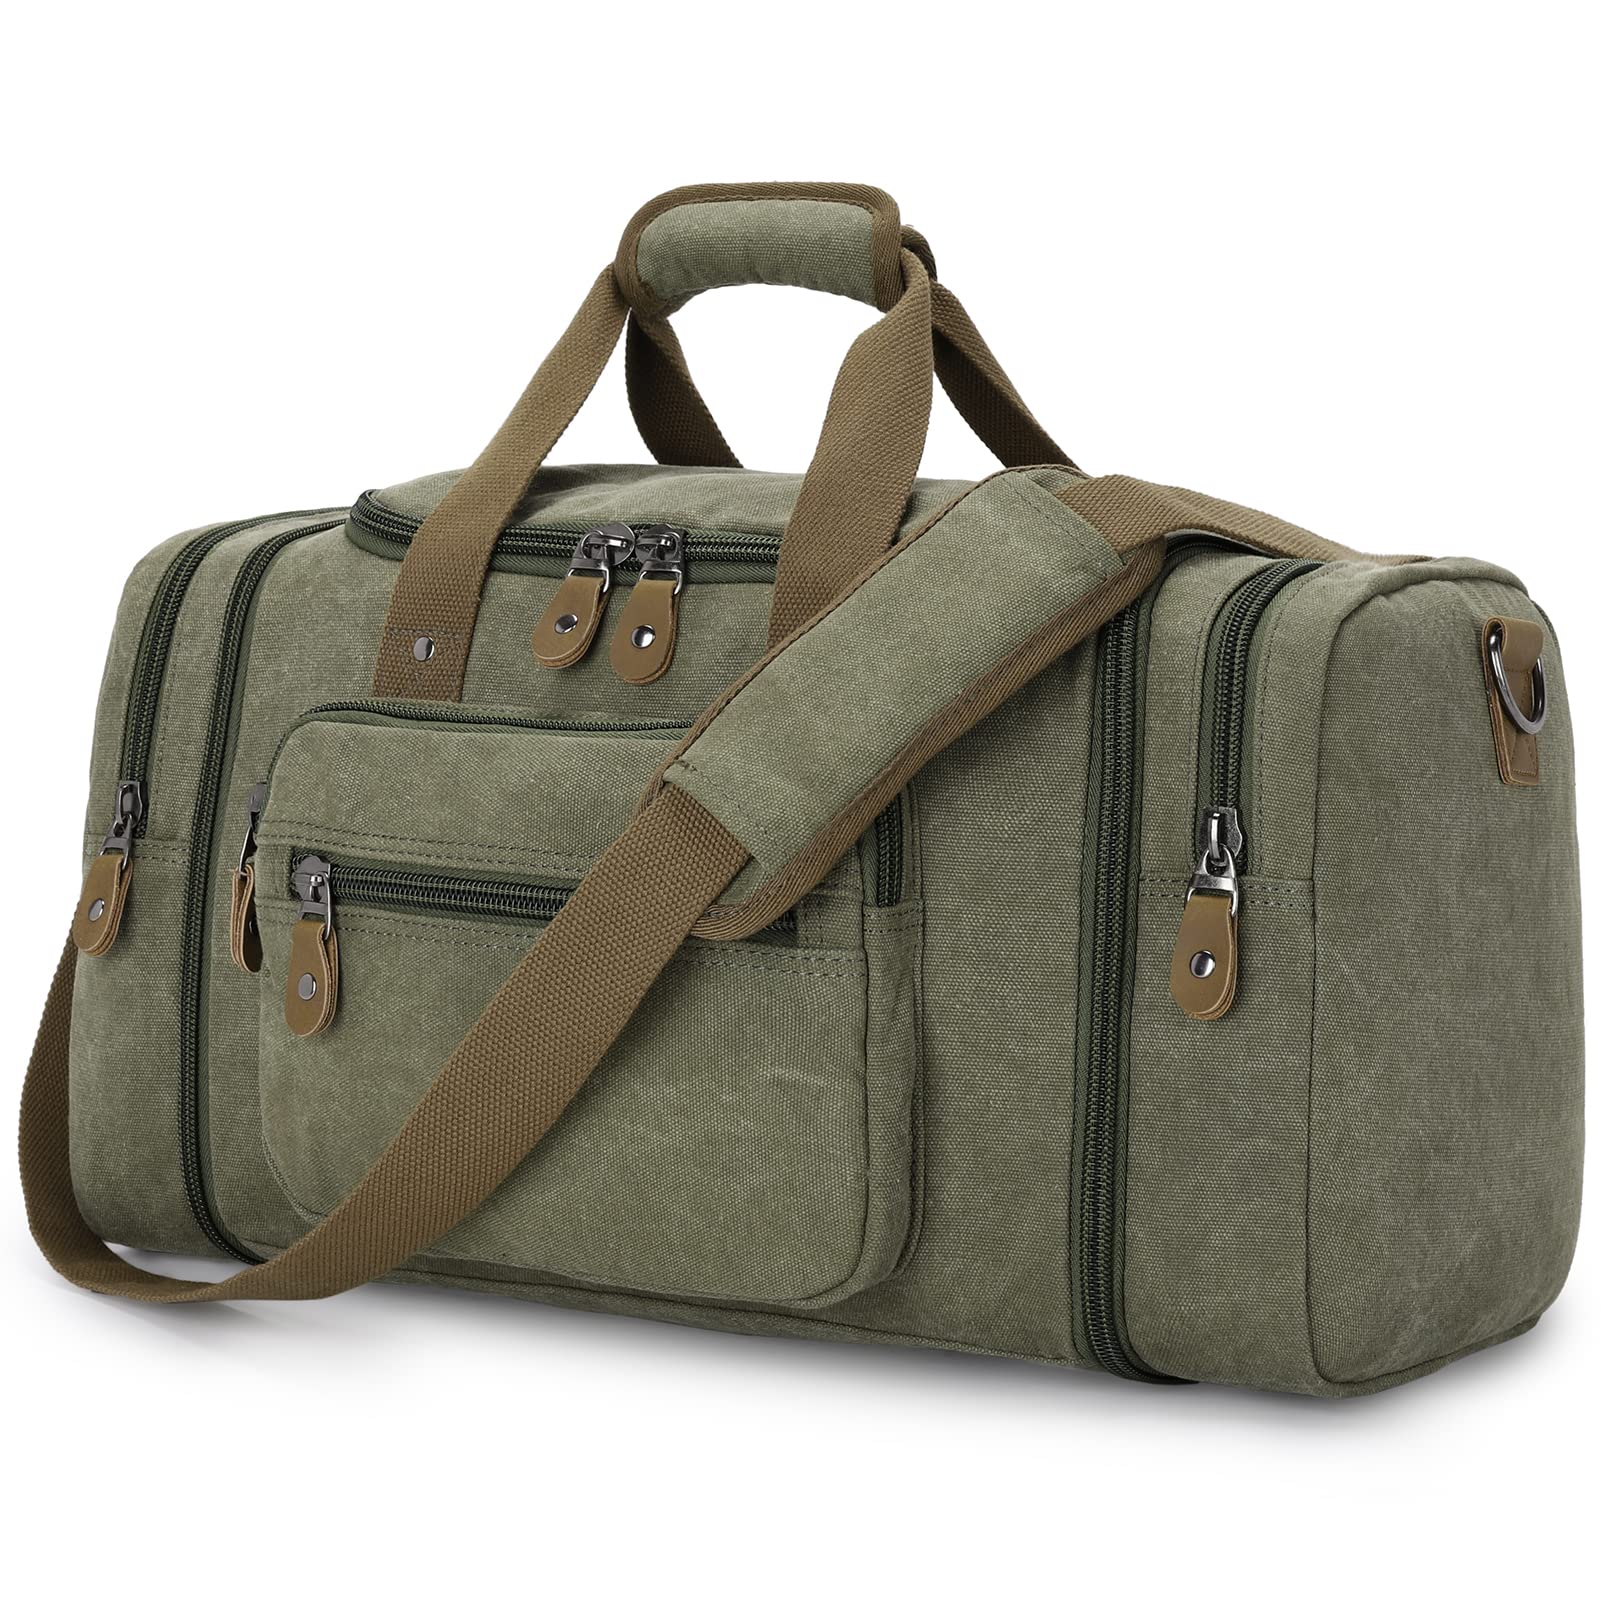 Gonex 50L Canvas Duffle Bag | Men's Weekender Bags for Travel